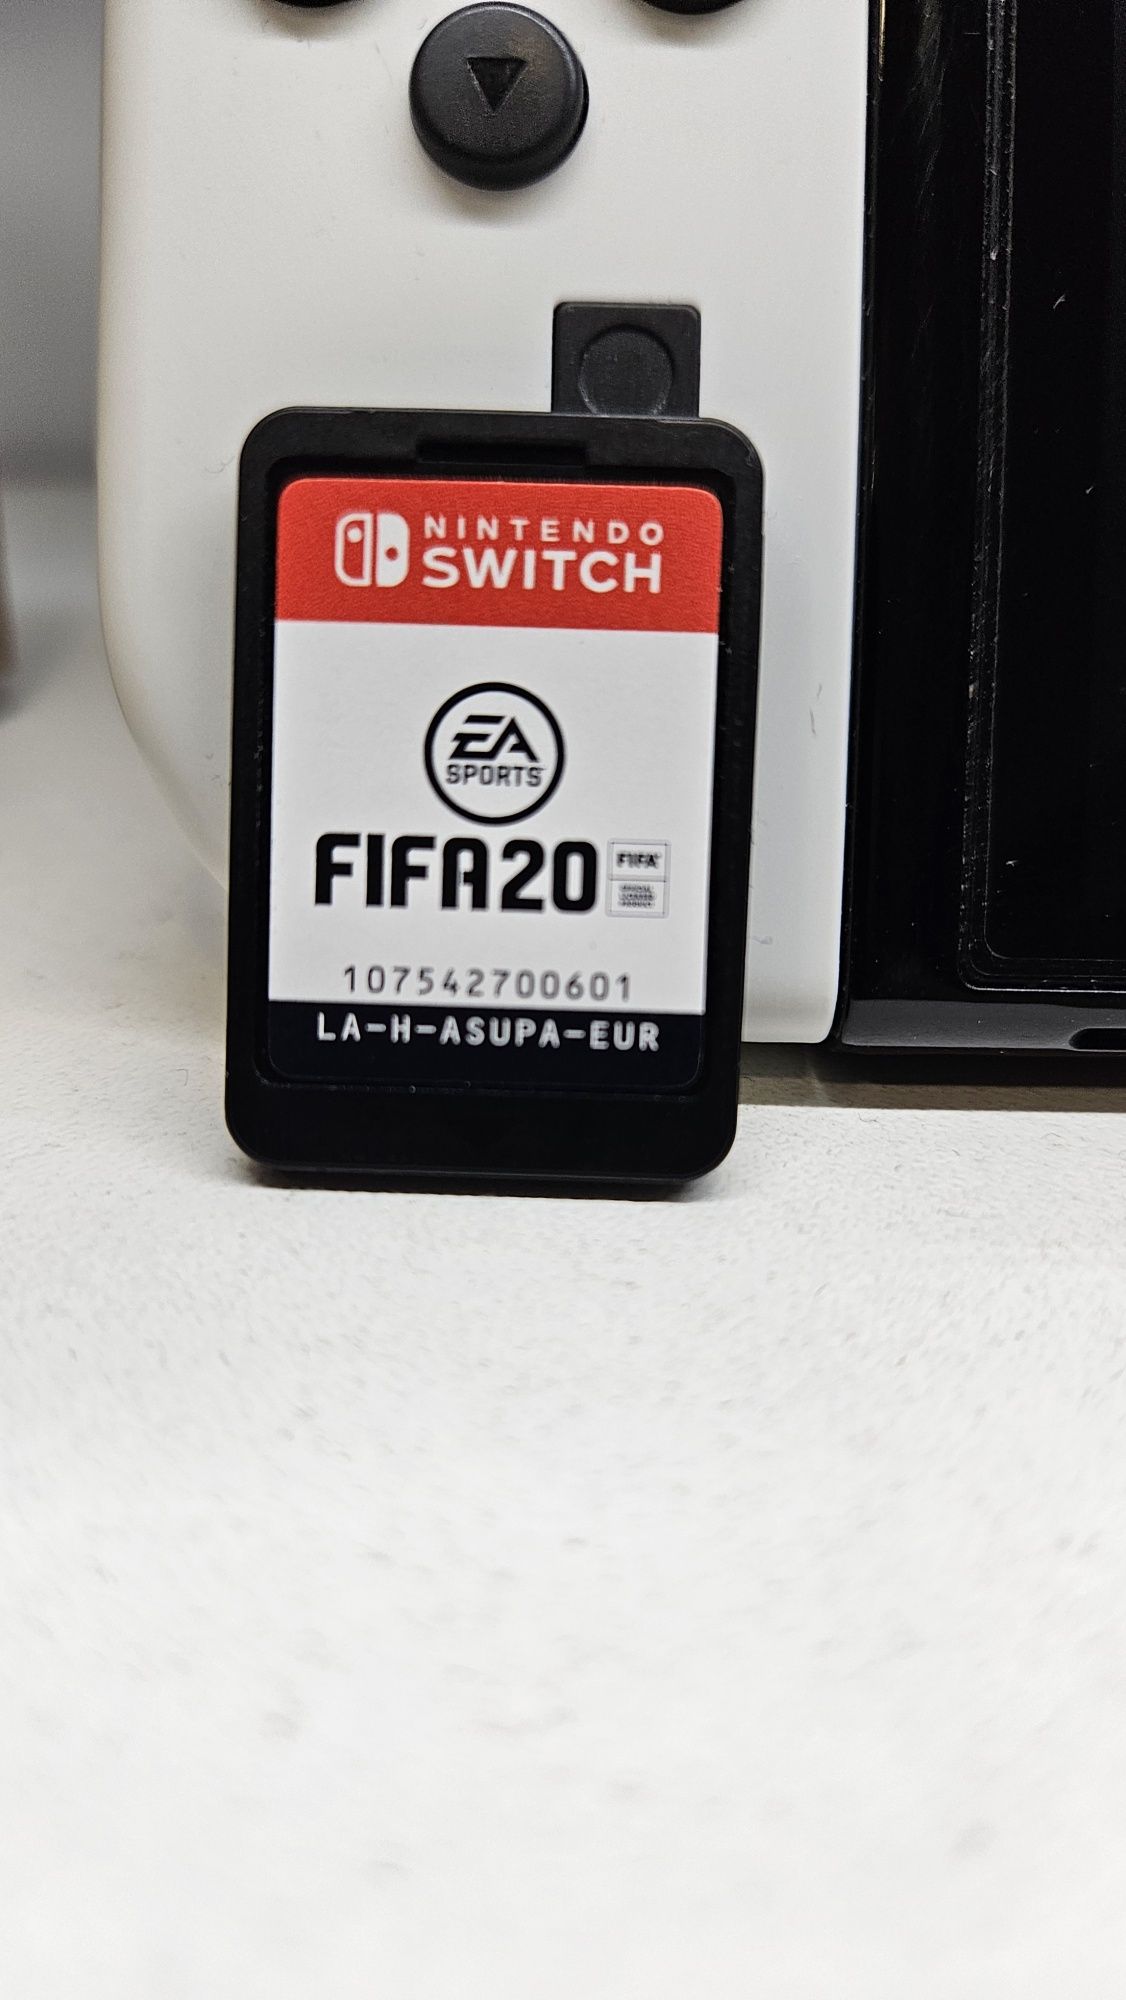 Картридж Nintendo switch Mario Fifa assassin's Wolfenstein б/у